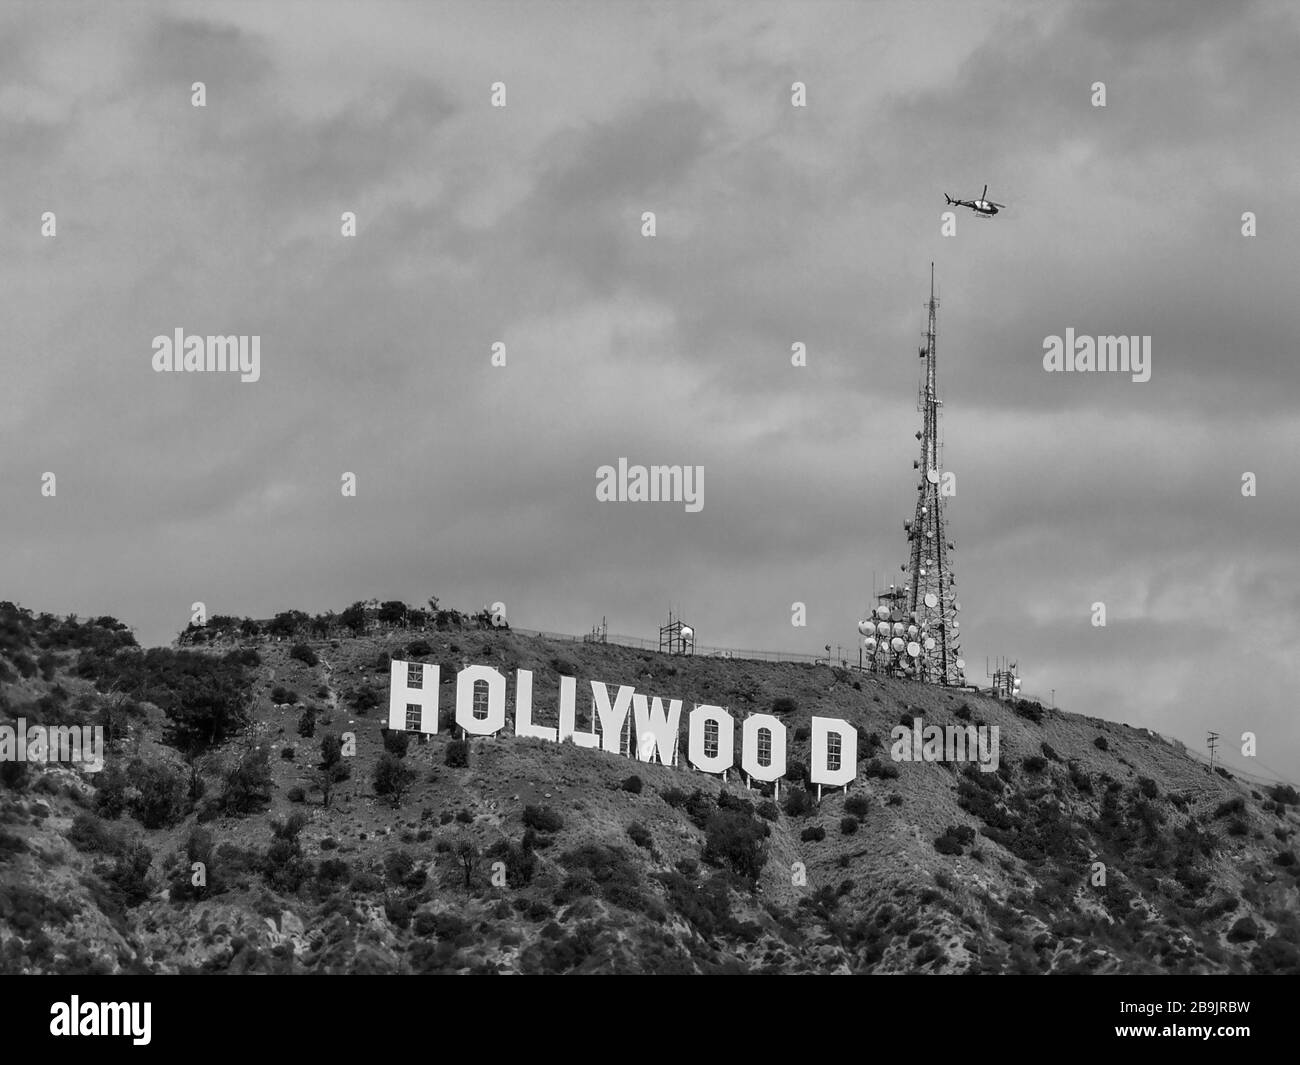 CORONAVIRUS LOS ANGELES LOCKDOWN Stockfoto